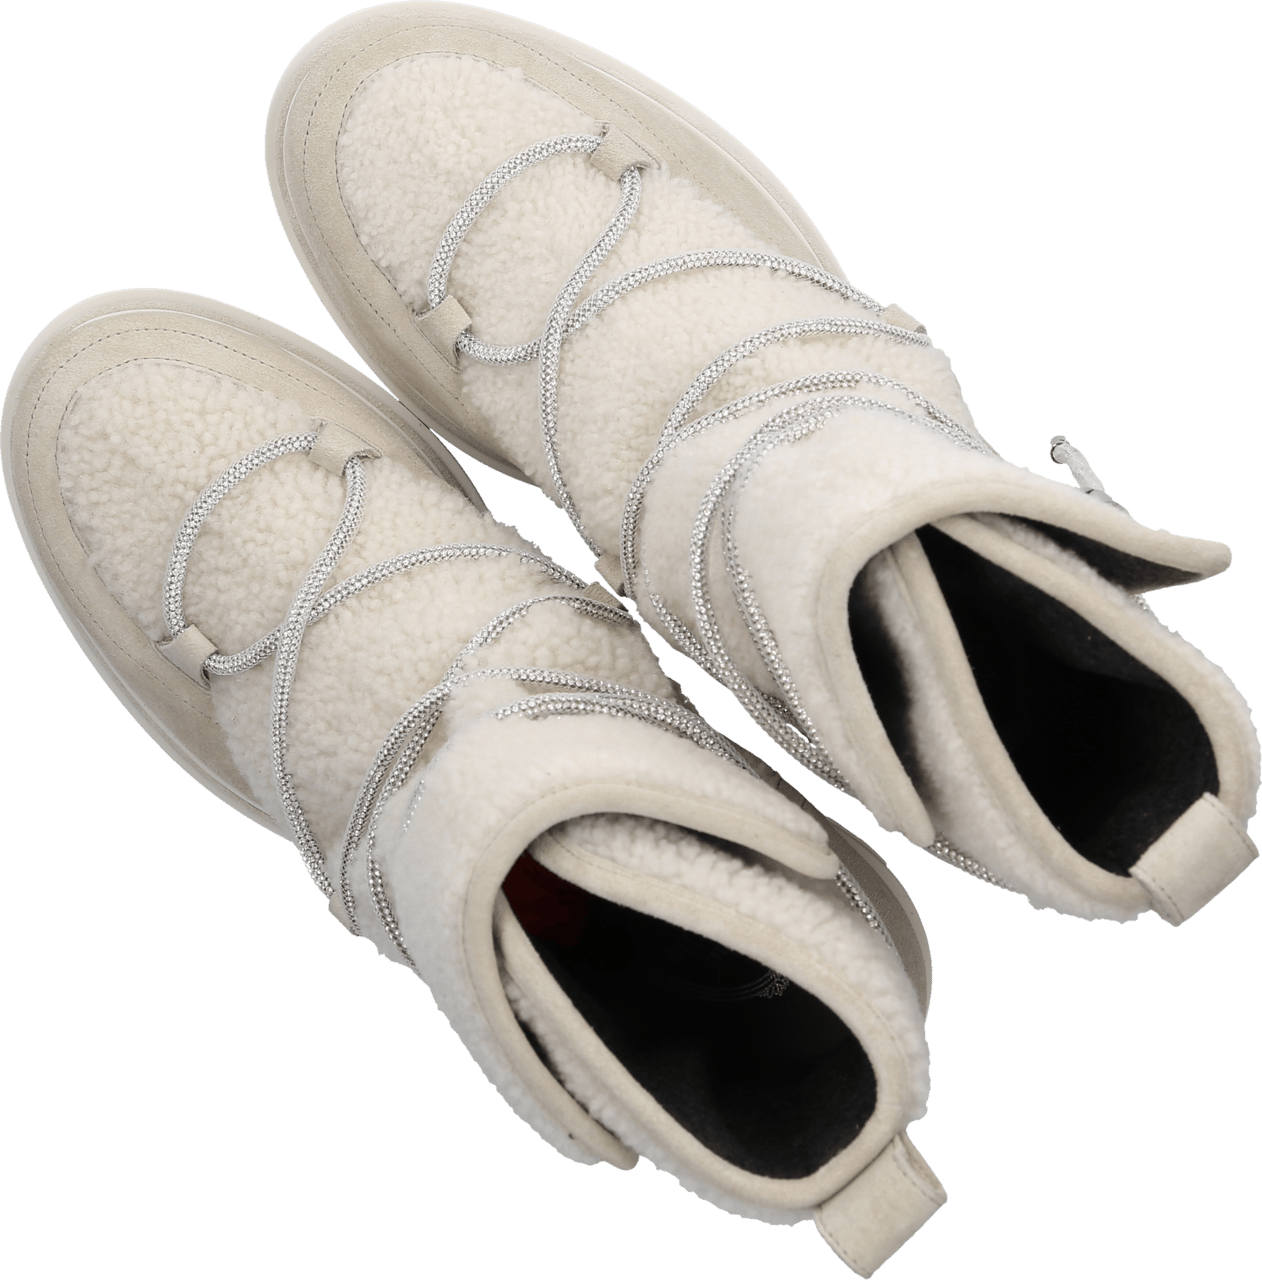 Rene Caovilla Ankle Boots Aspen Suede Taurus Beige